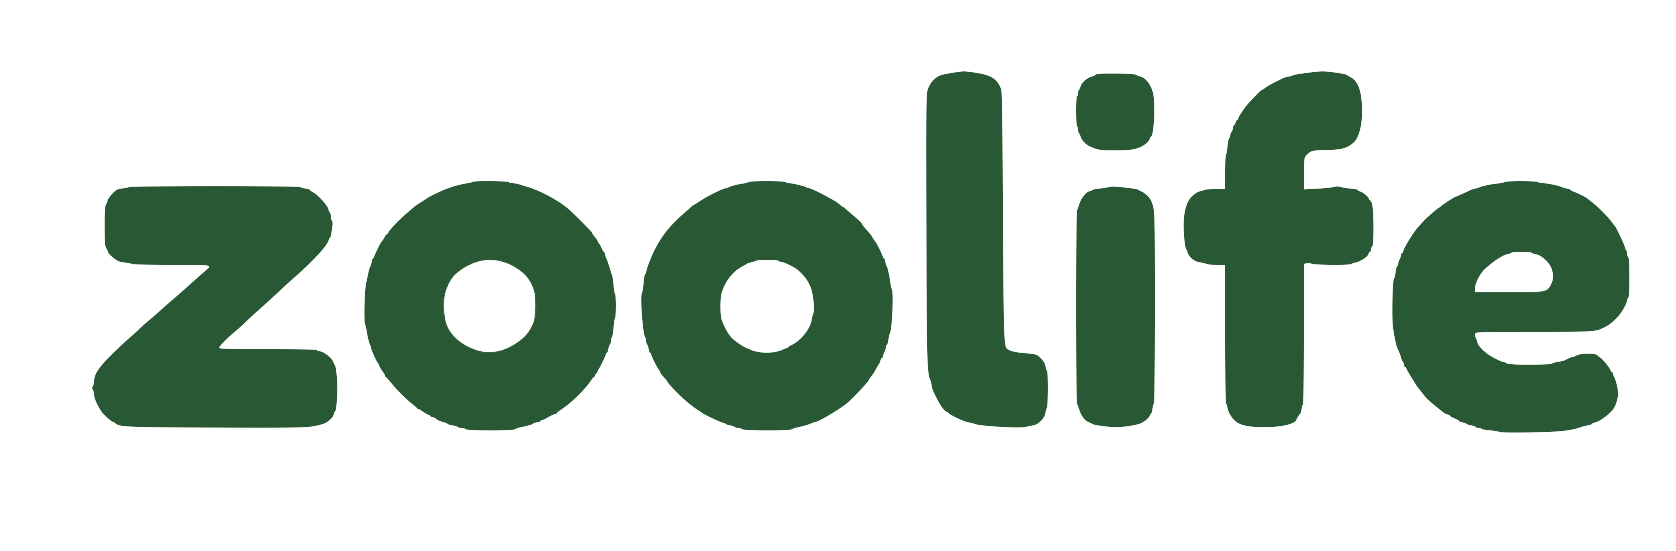 zoolife logo (green)